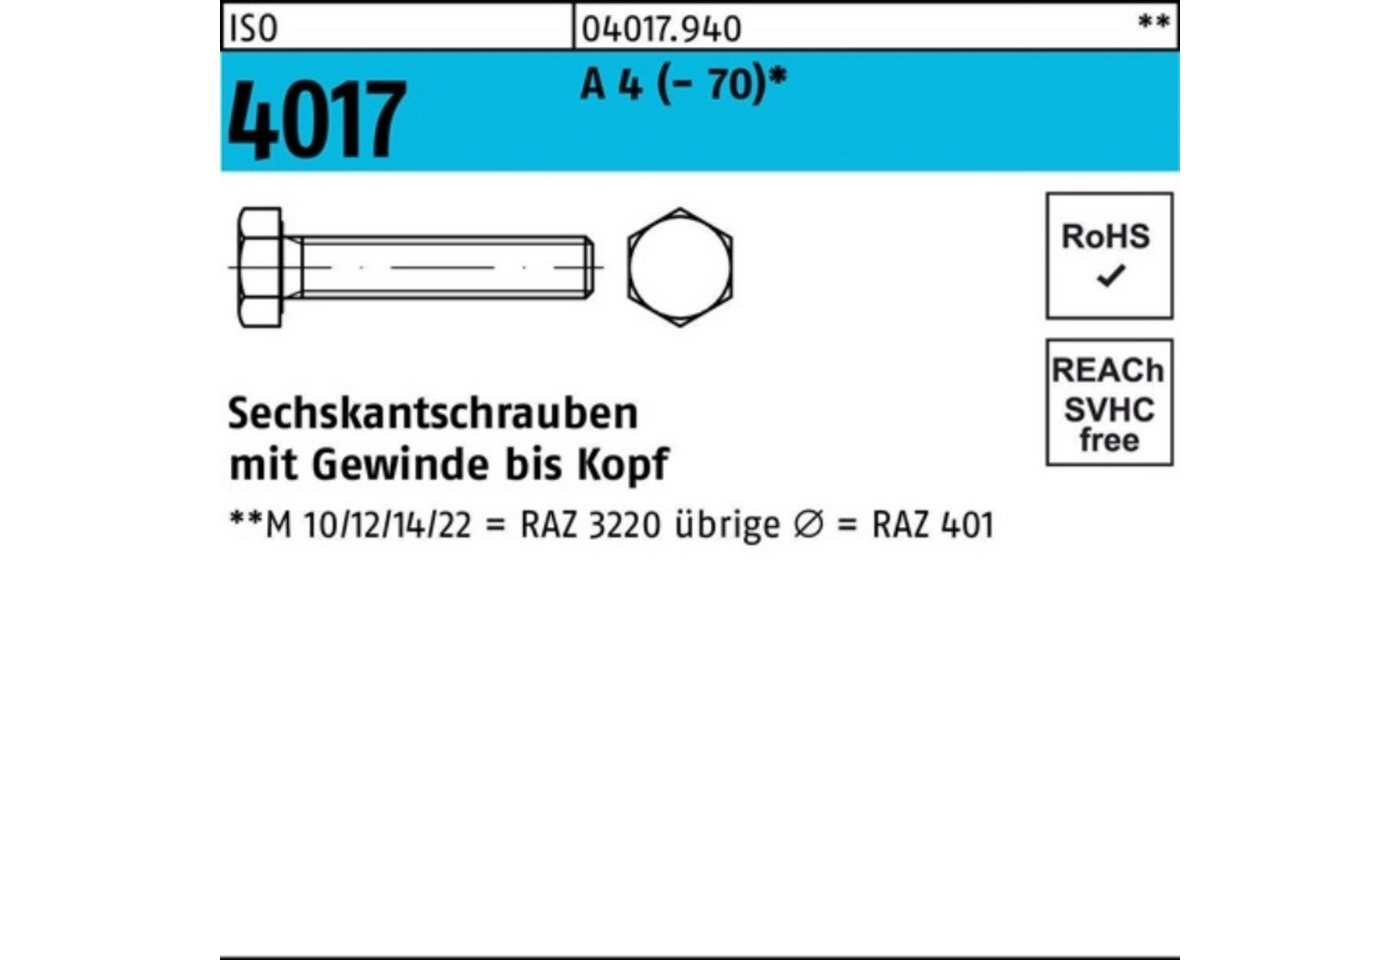 Bufab Sechskantschraube 100er Pack Sechskantschraube ISO 4017 VG M18x 35 A 4 (70) 1 Stück I von Bufab